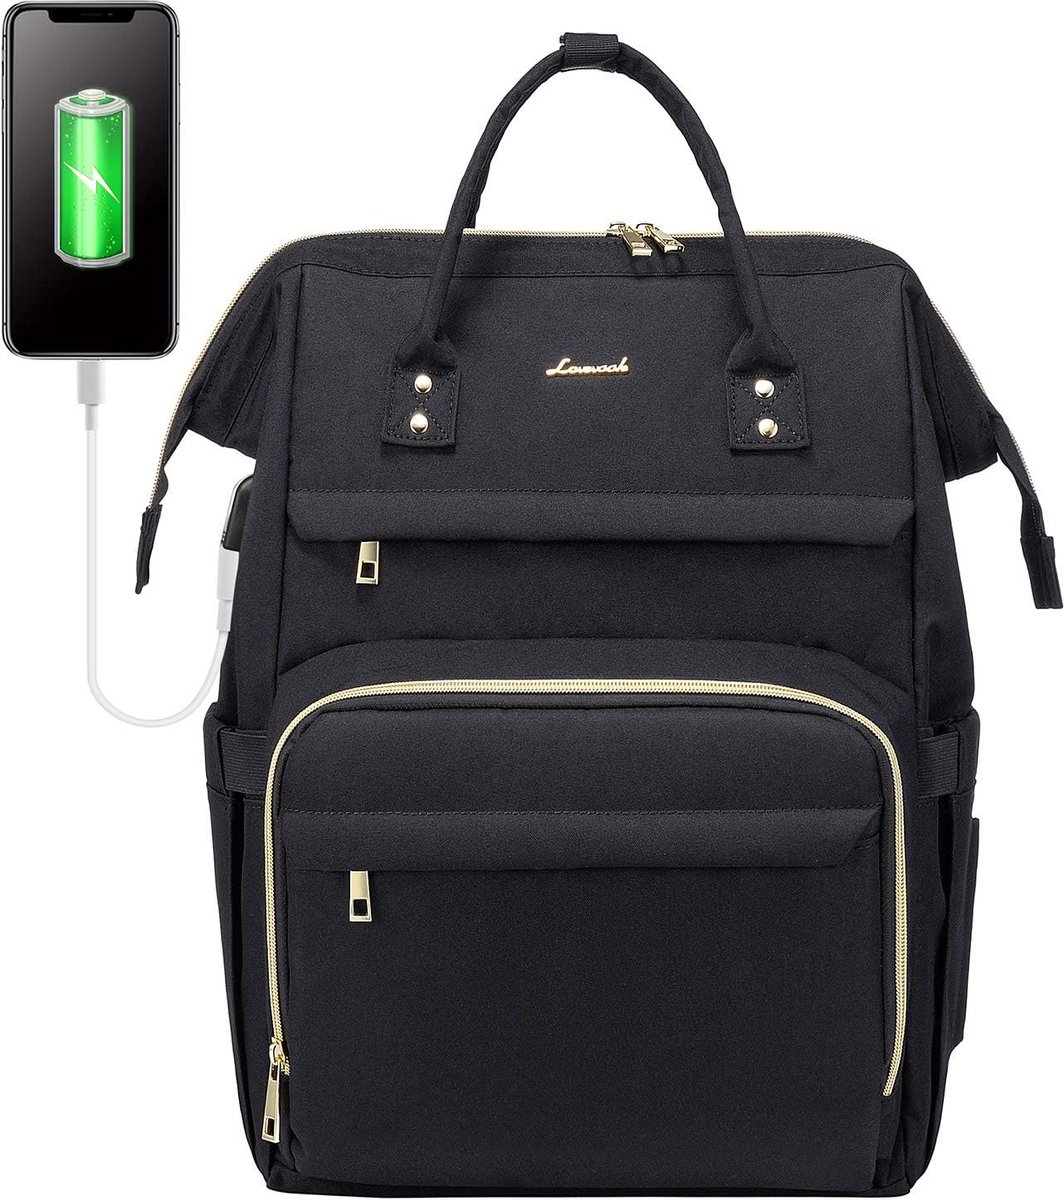 Laptoprugzak 17 inch voor dames - Zwart - USB-oplaadpoort - Anti-diefstaltas - Waterdicht - Werk, school, reizen